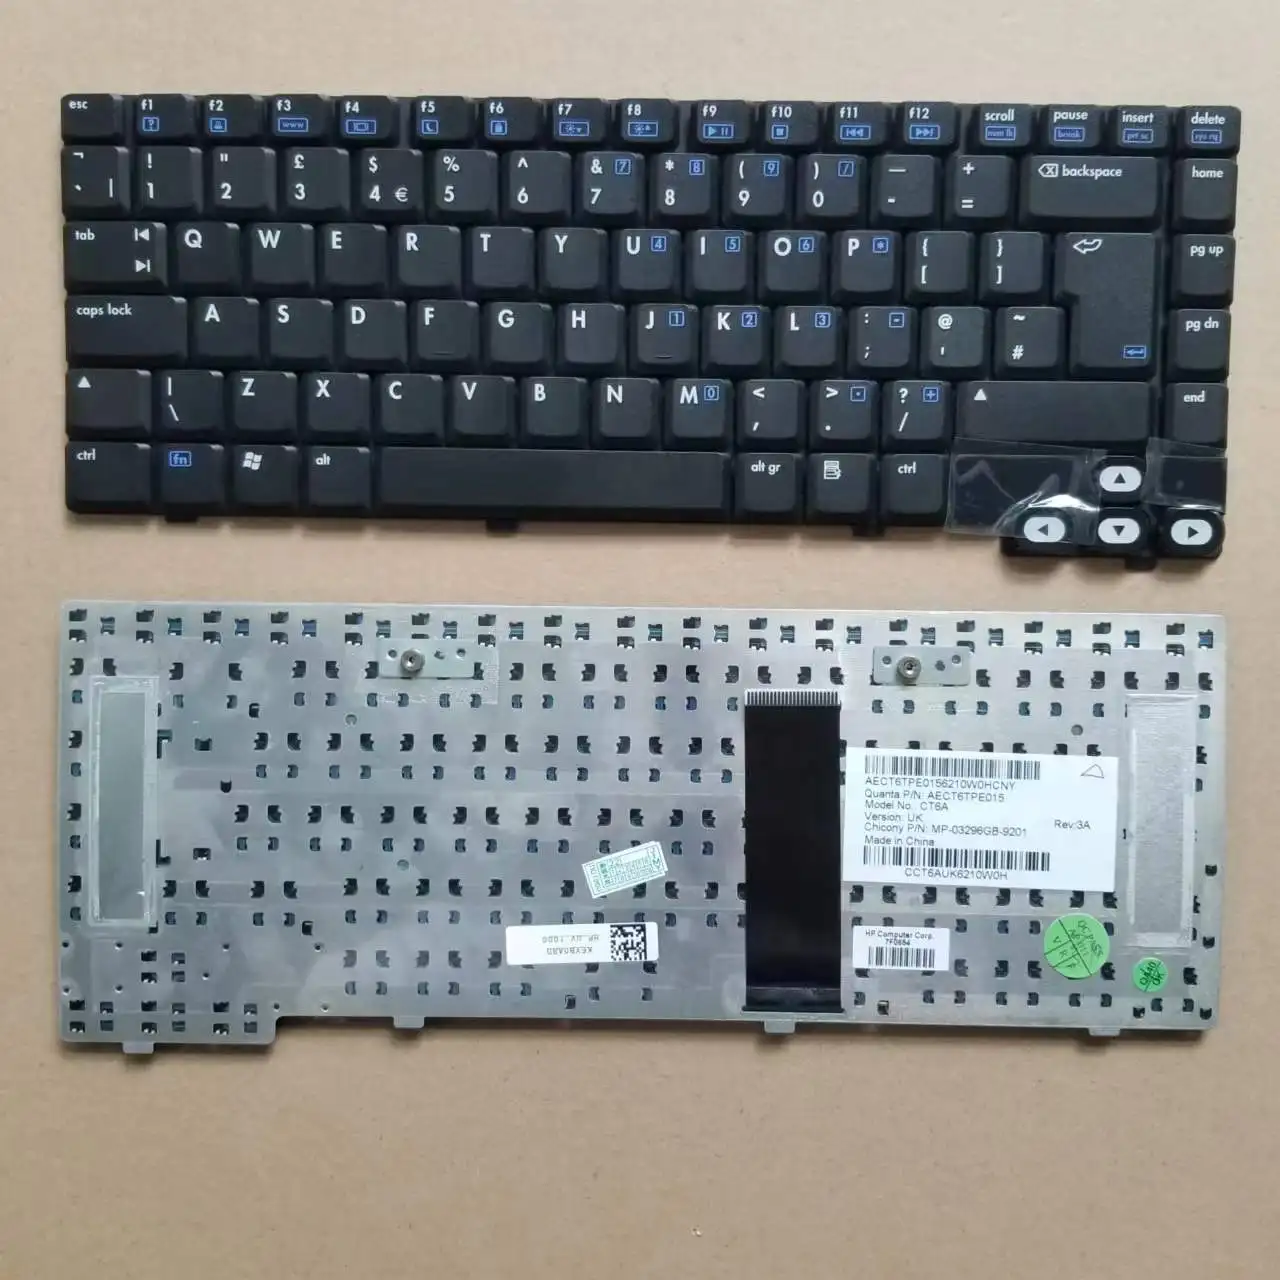 

New UK Keyboard For HP Pavilion DV1000 DV1100 DV1200 Series Black AECT6TPE015 CT6A MP-03296GB-9201